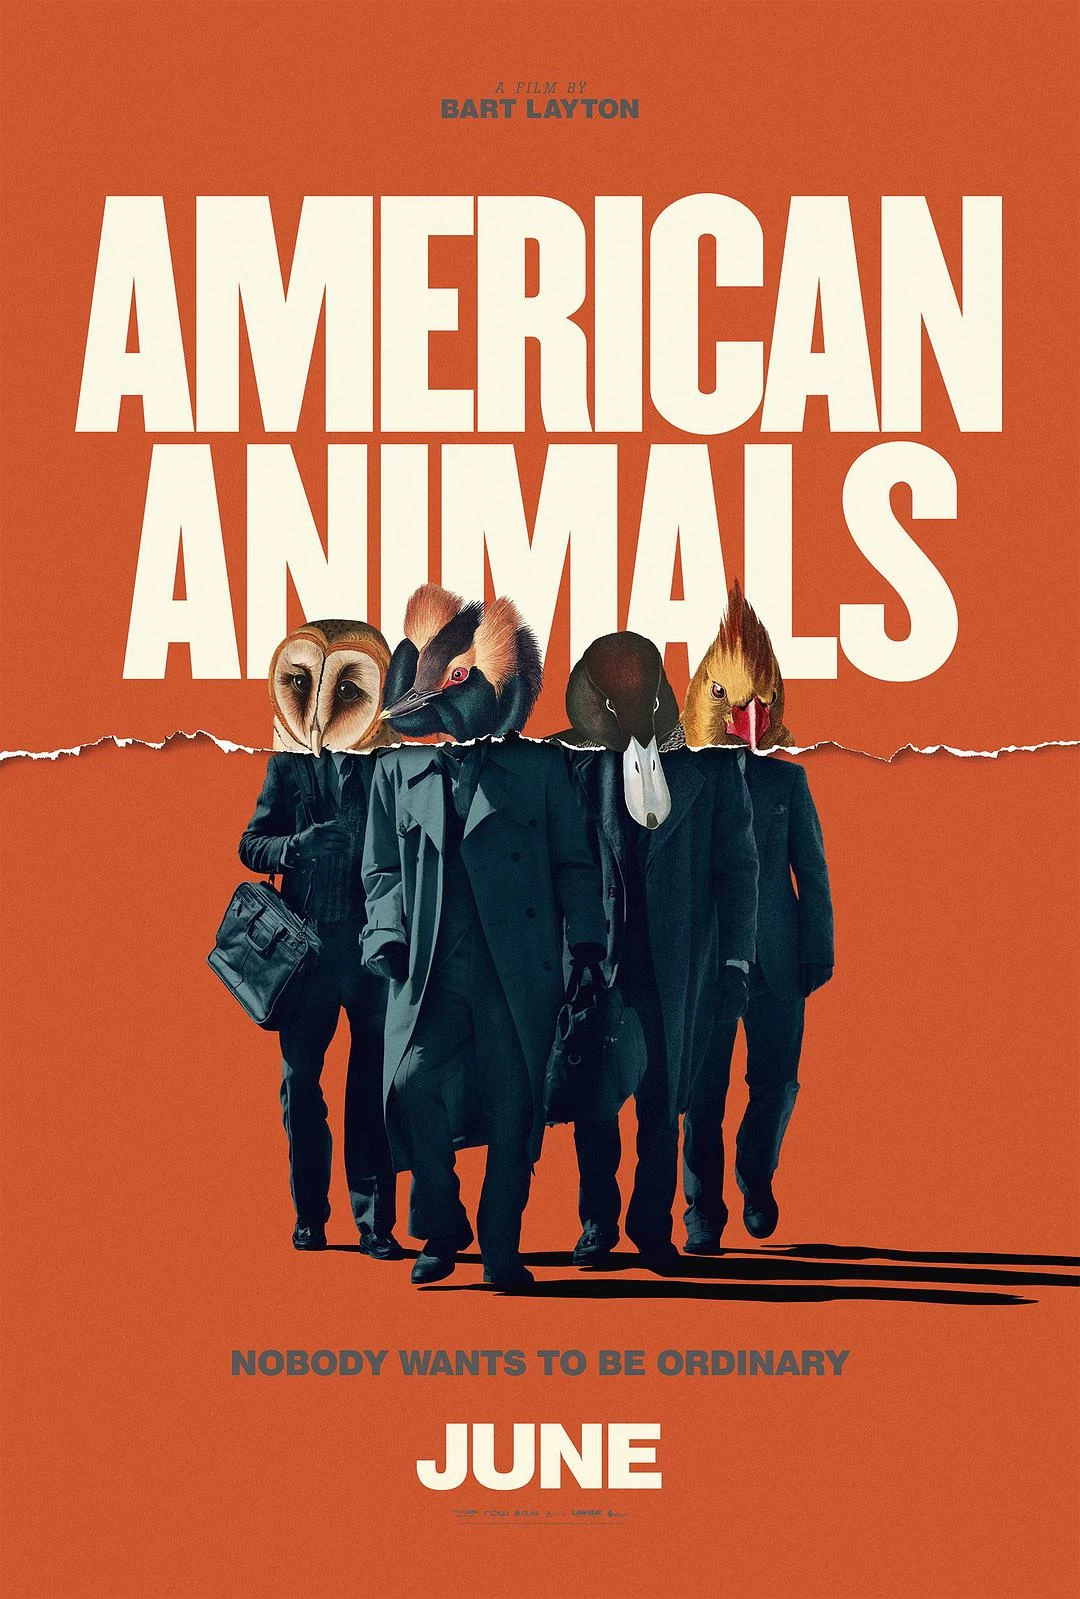 美国动物  蓝光原盘下载+高清MKV版  2018  American Animals 36.7G